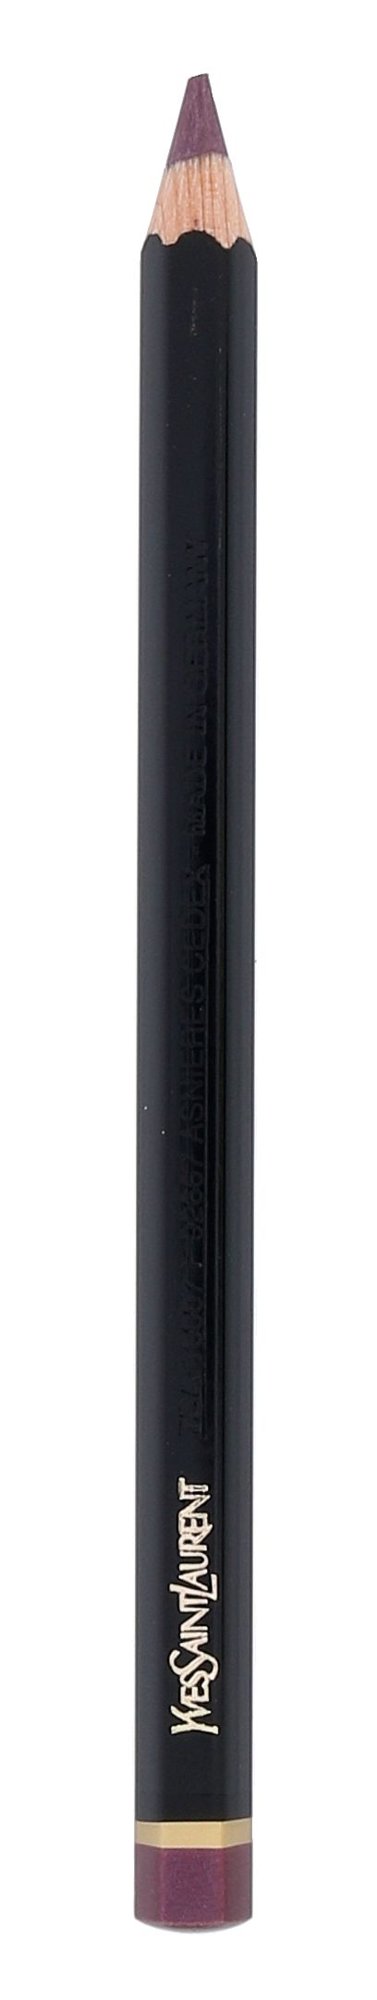 Yves Saint Laurent Lip Liner lūpų pieštukas